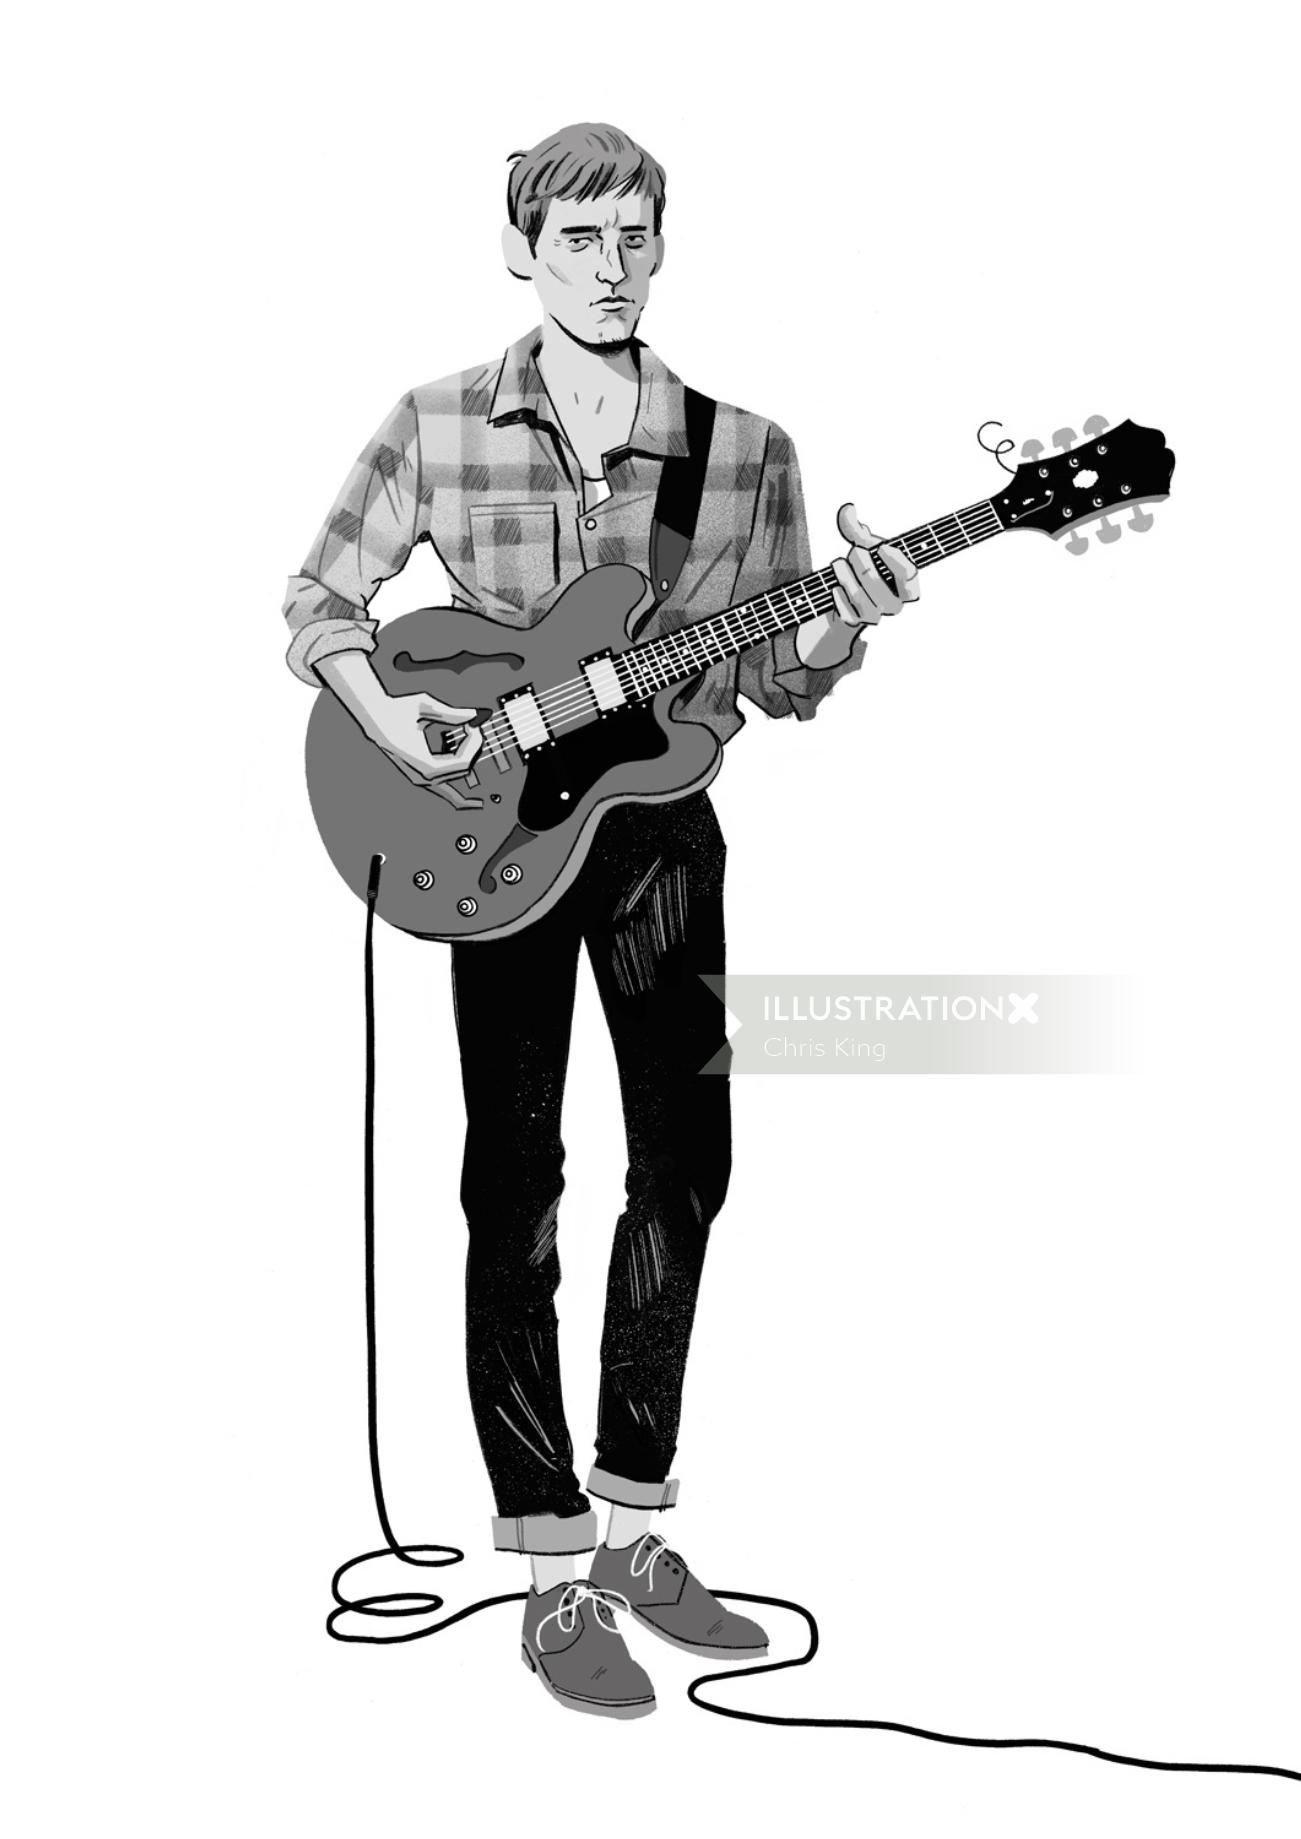 Illustration gitariste par Cris King